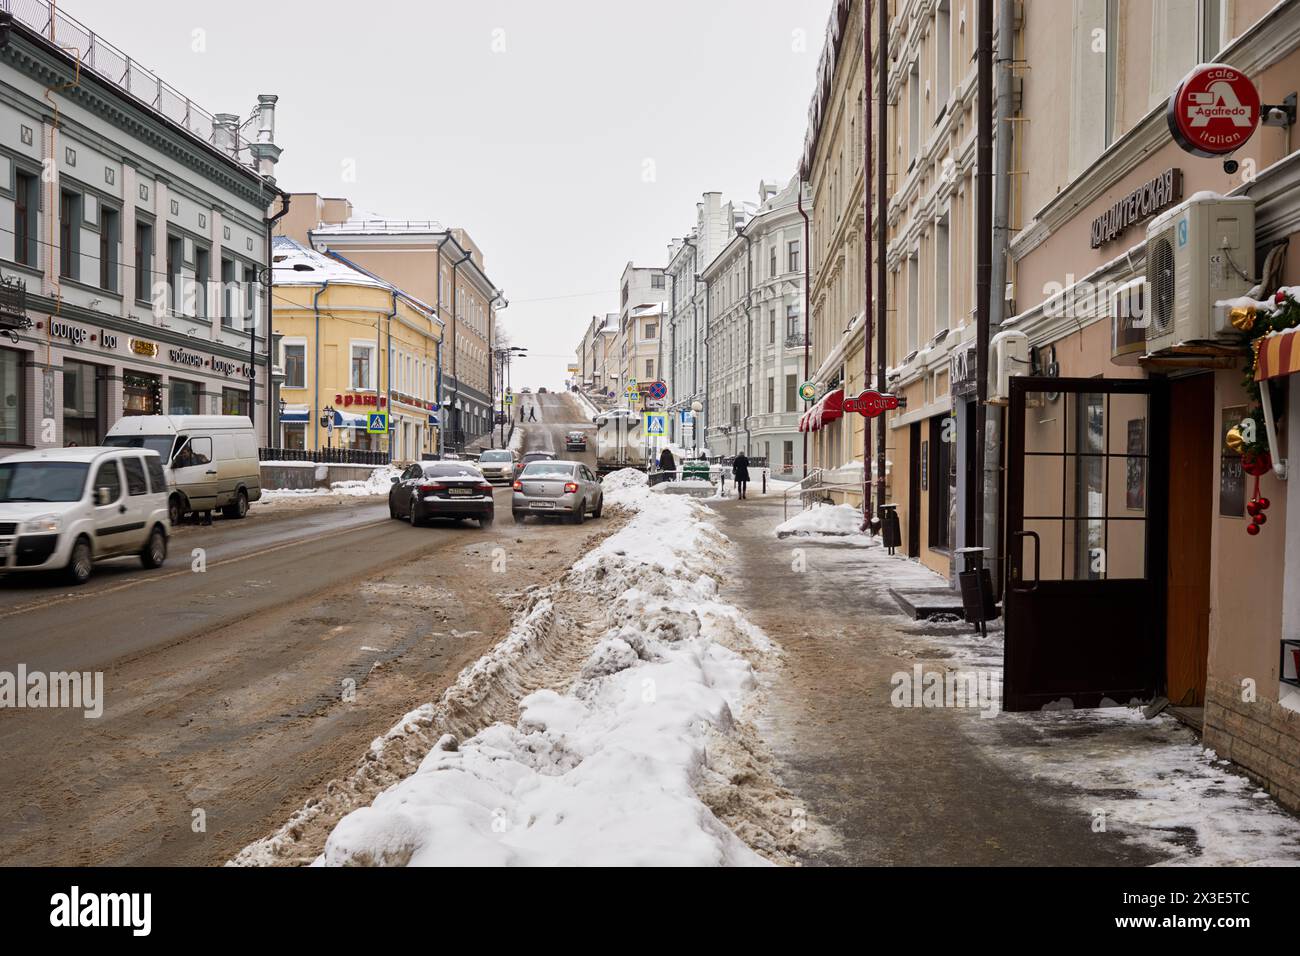 KAZAN, RUSSIA - DEC 8, 2017: Car and pedestrian traffic at Chernyshevsky street. Street named after N.Chernyshevsky - russian philosopher, democrat, s Stock Photo